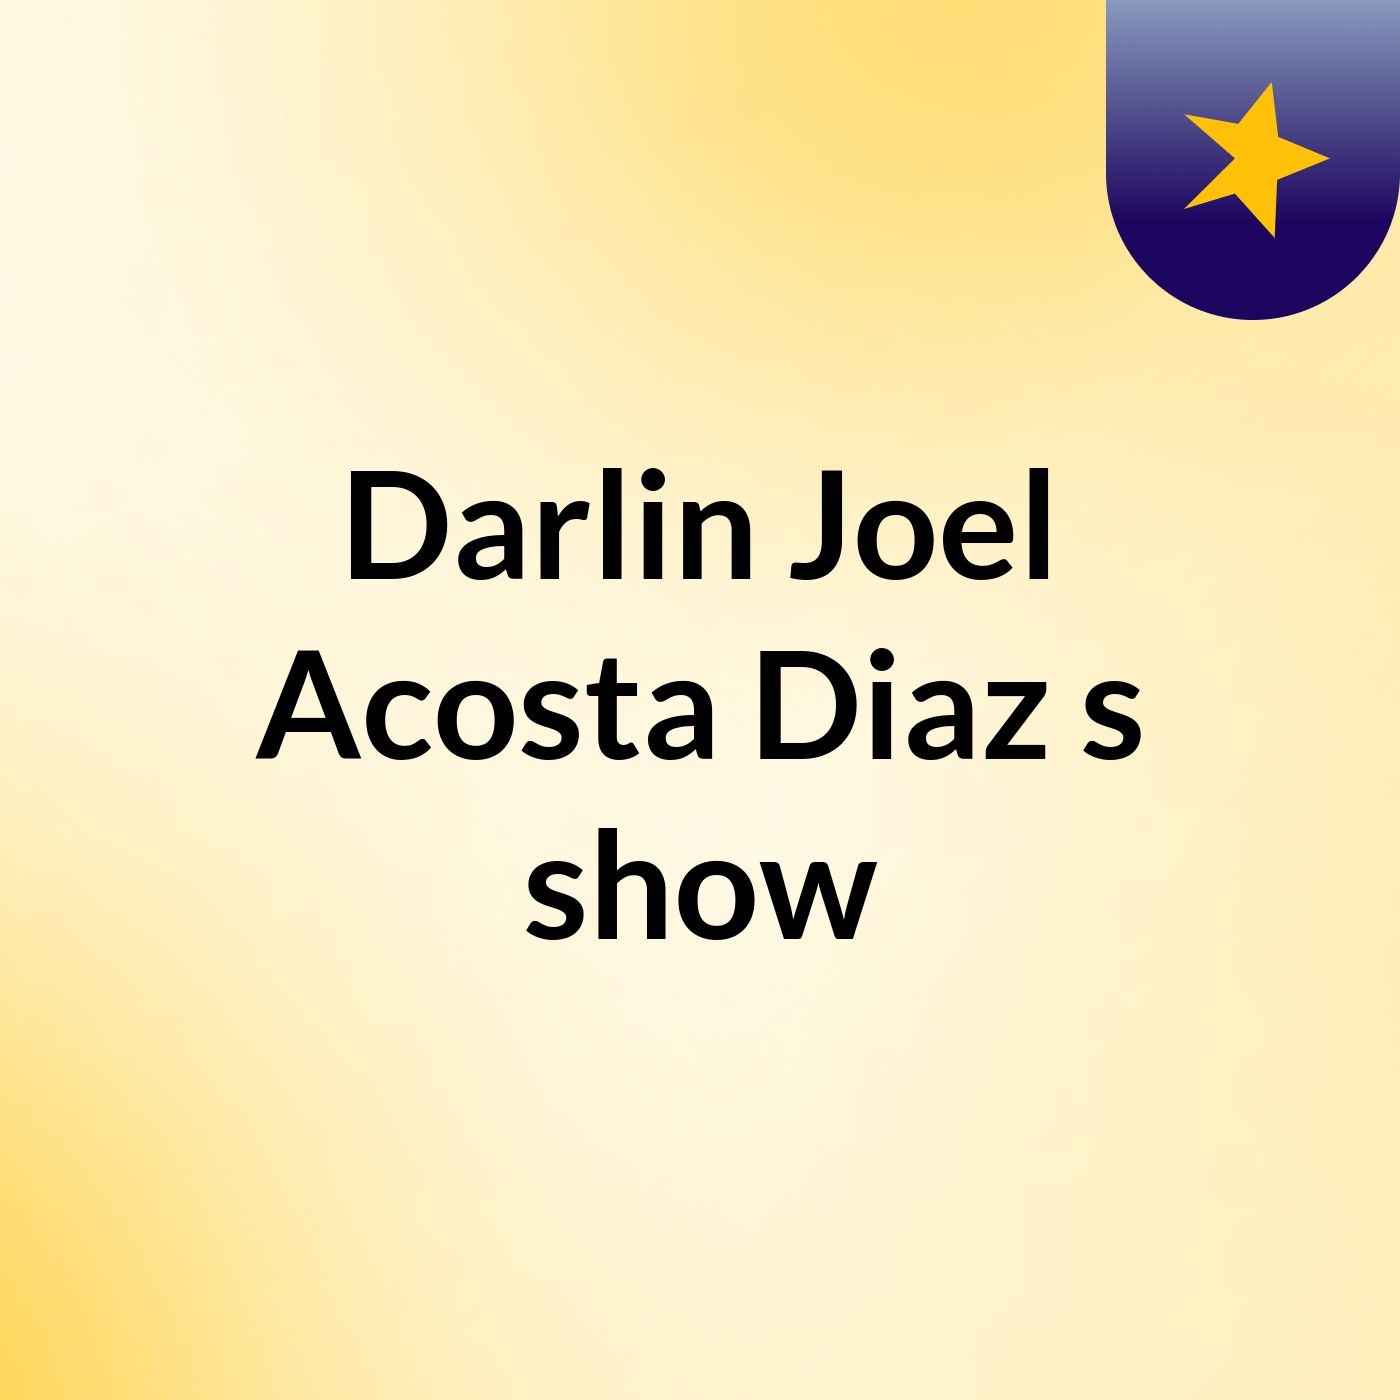 Darlin Joel Acosta Diaz's show